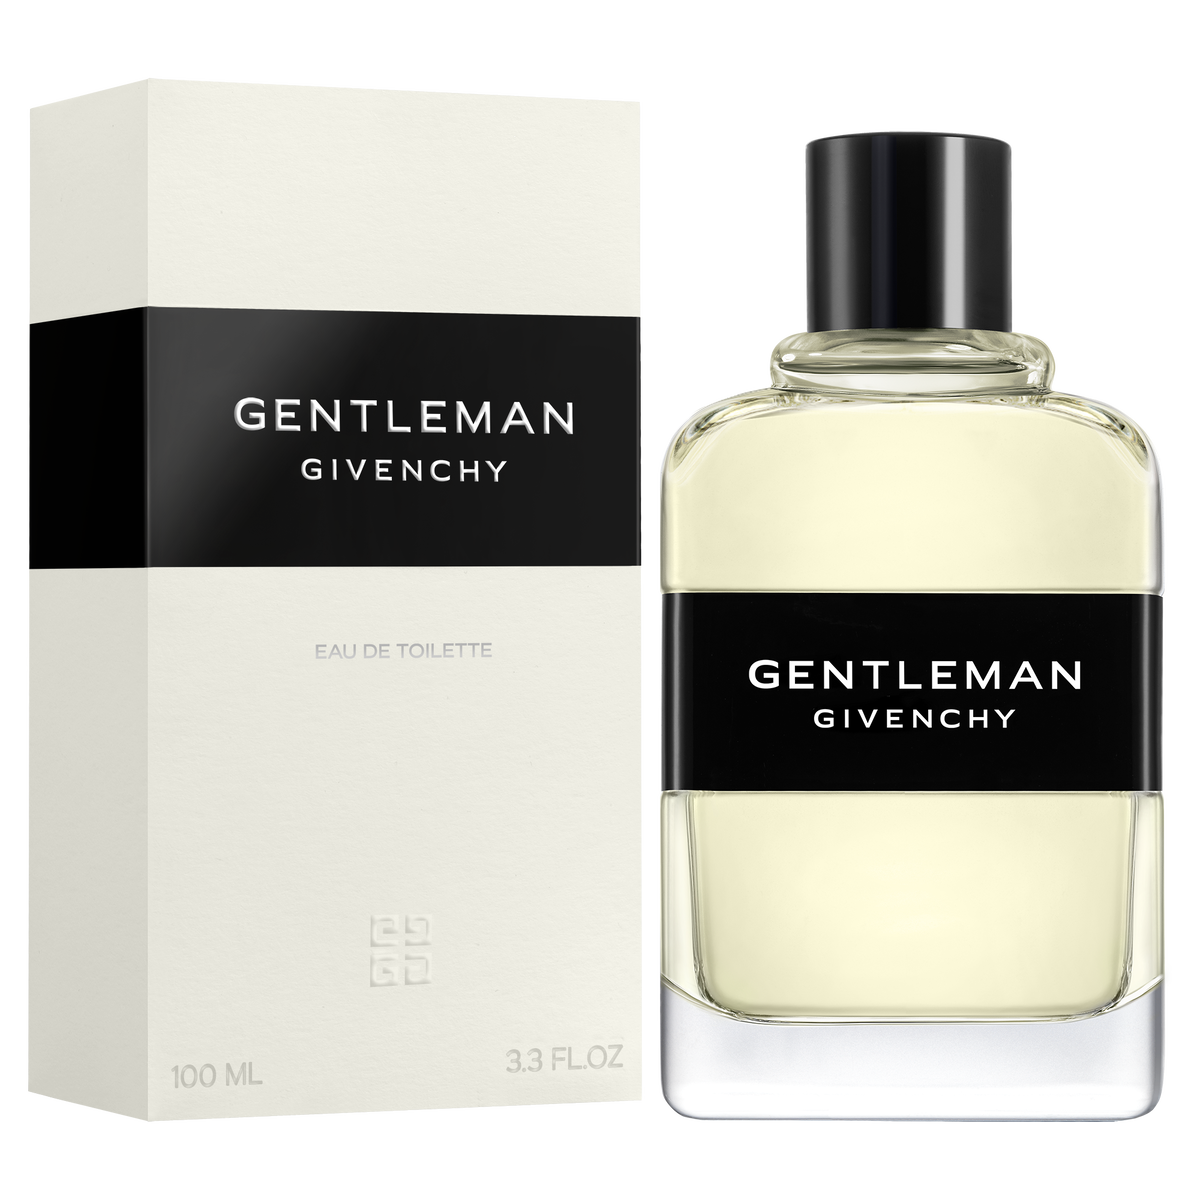 Givenchy gentleman eau de toilette nude wax